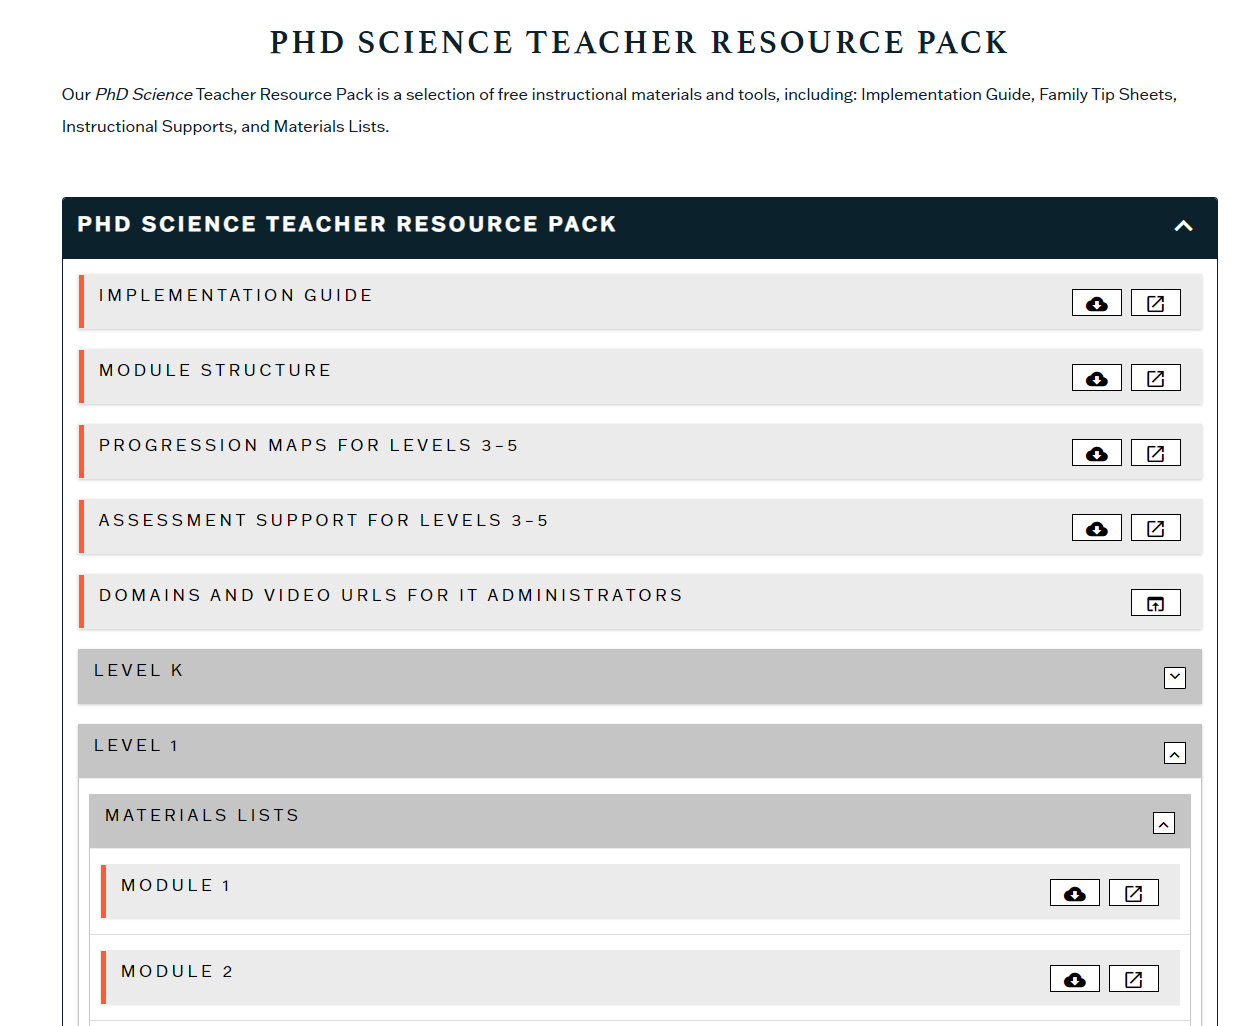 Teacher Resource Pack offerings